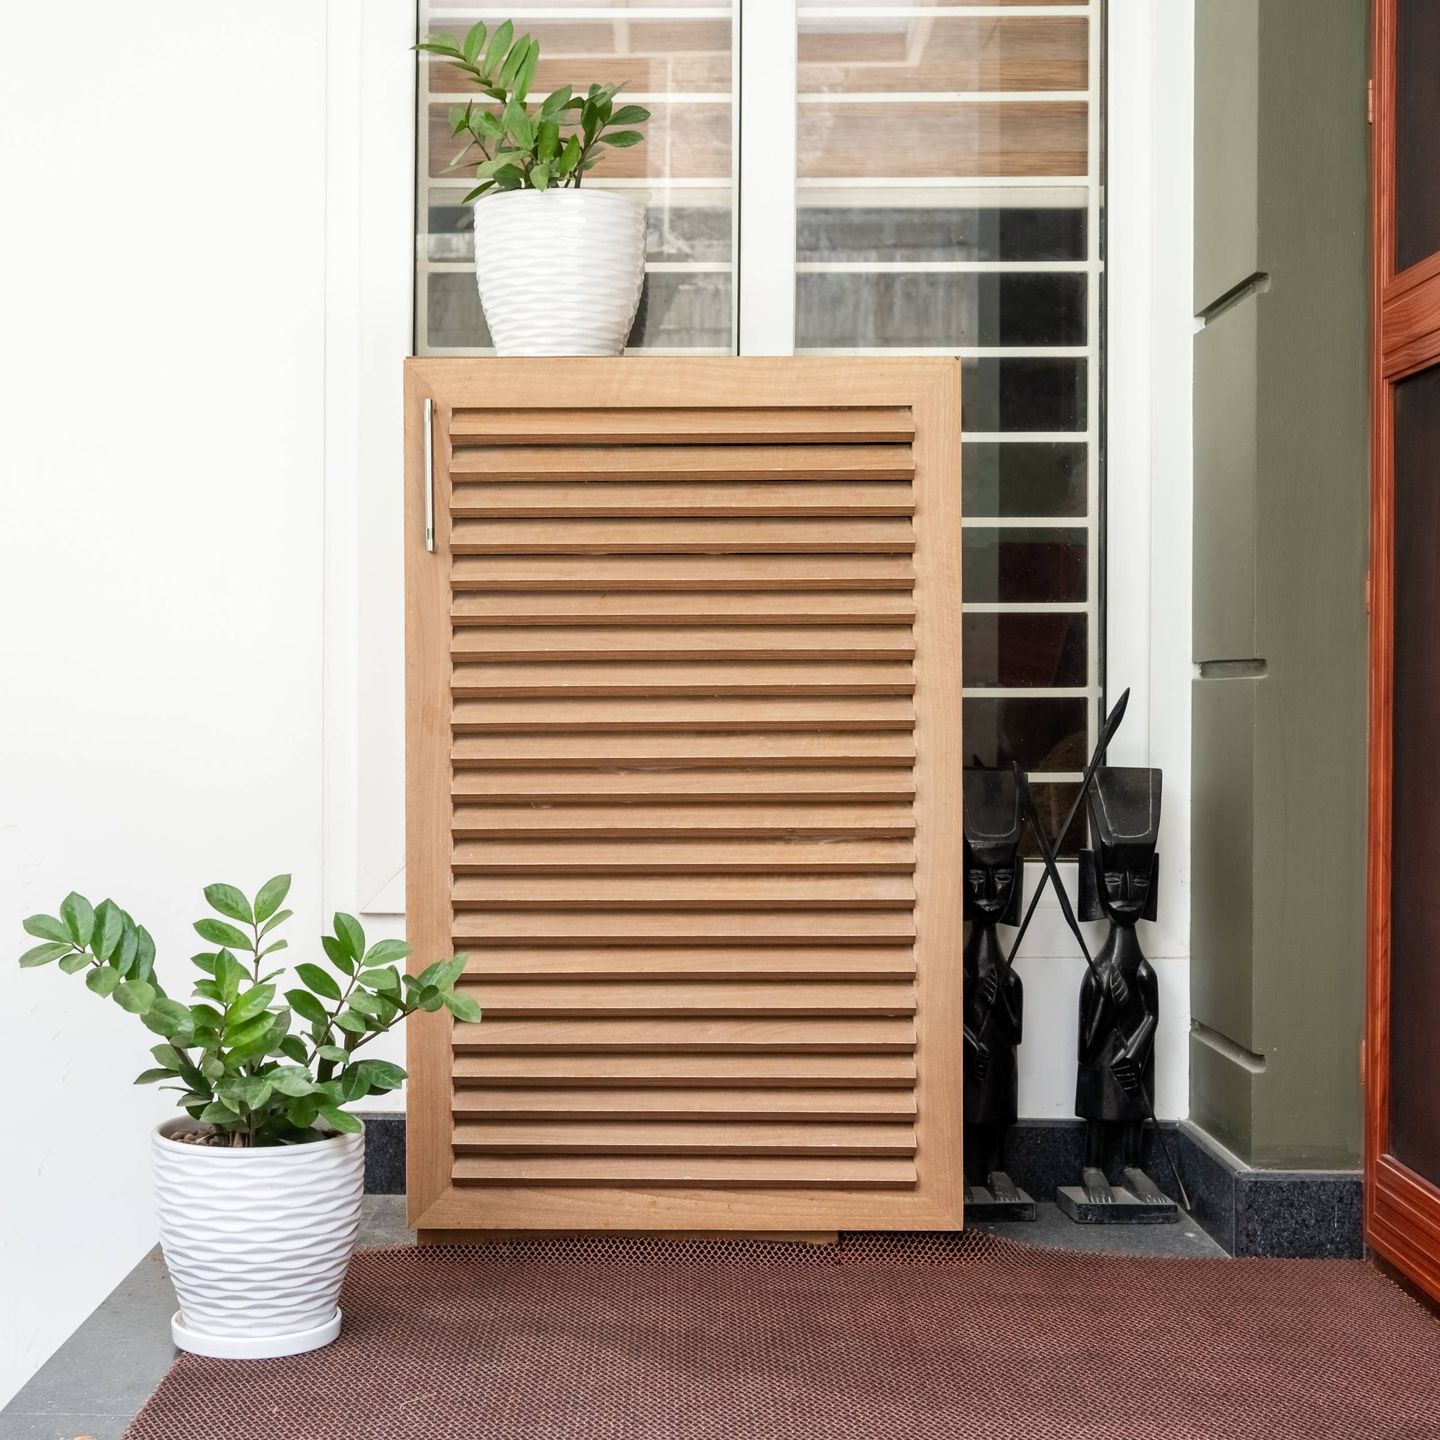 Foyer Design With Brown Storage Unit - Livspace